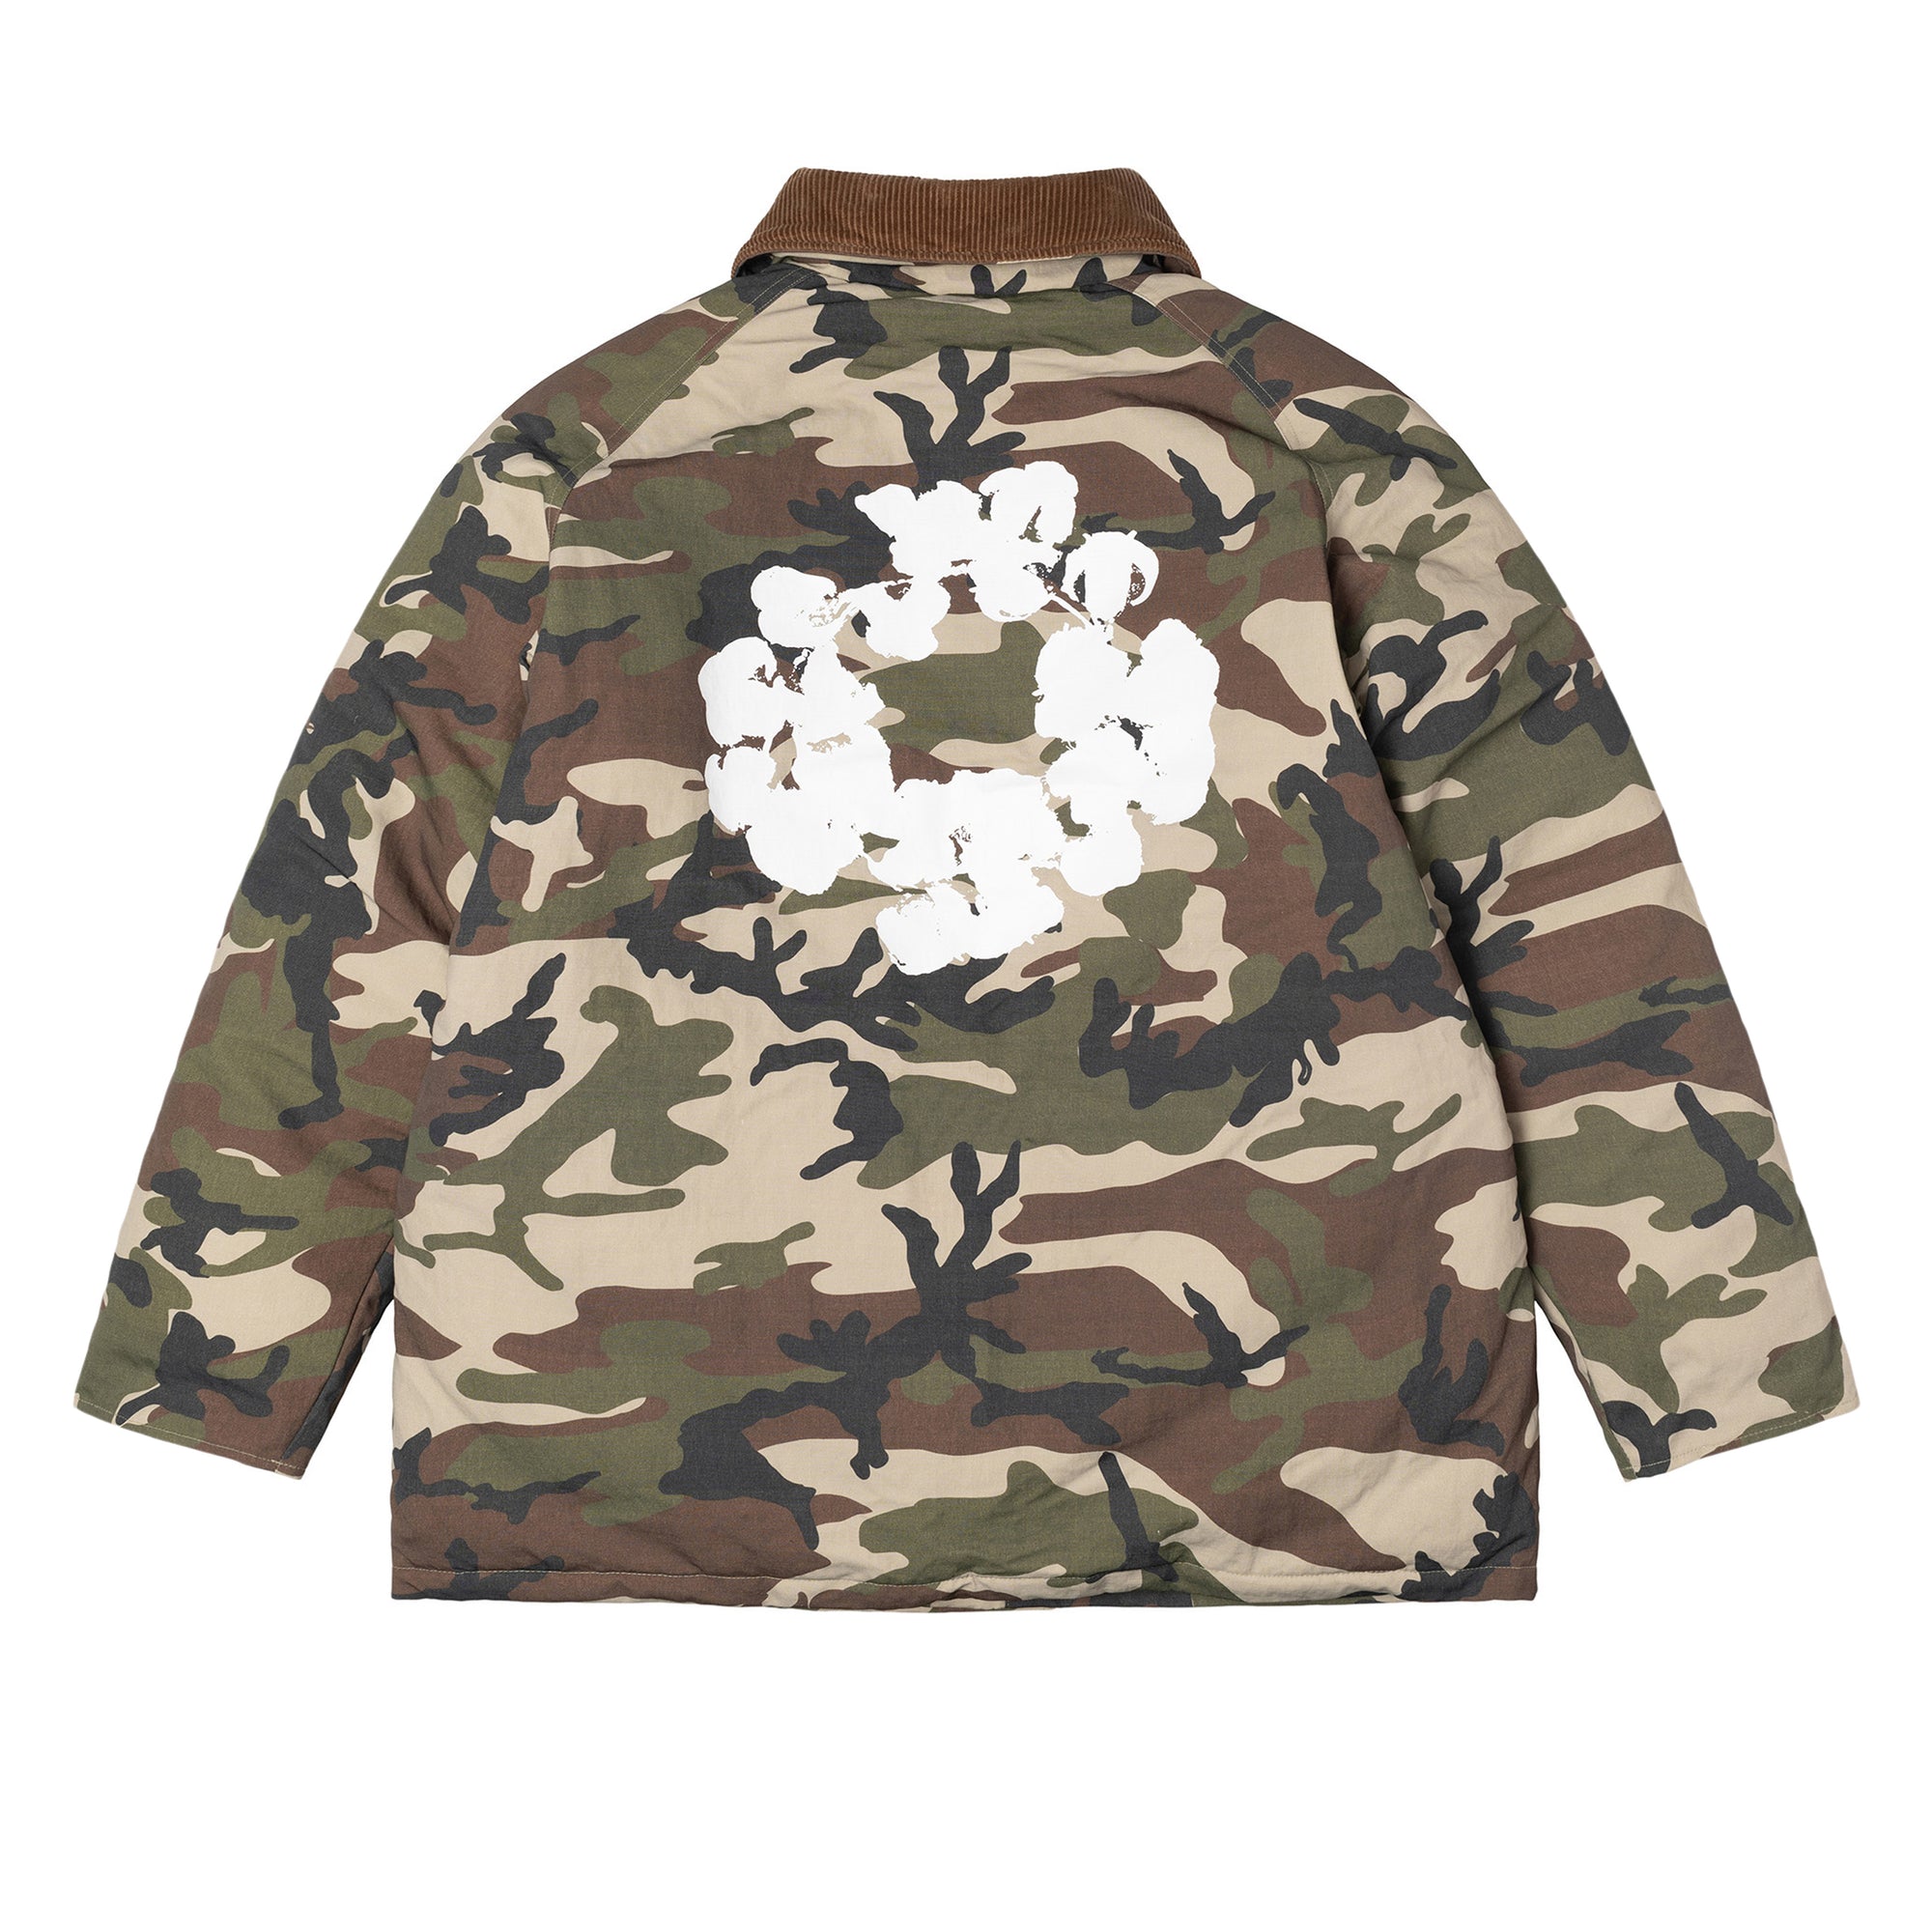 Denim Tears - Stüssy Ripstop Camouflage Army Jacket - (Camouflage) view 2